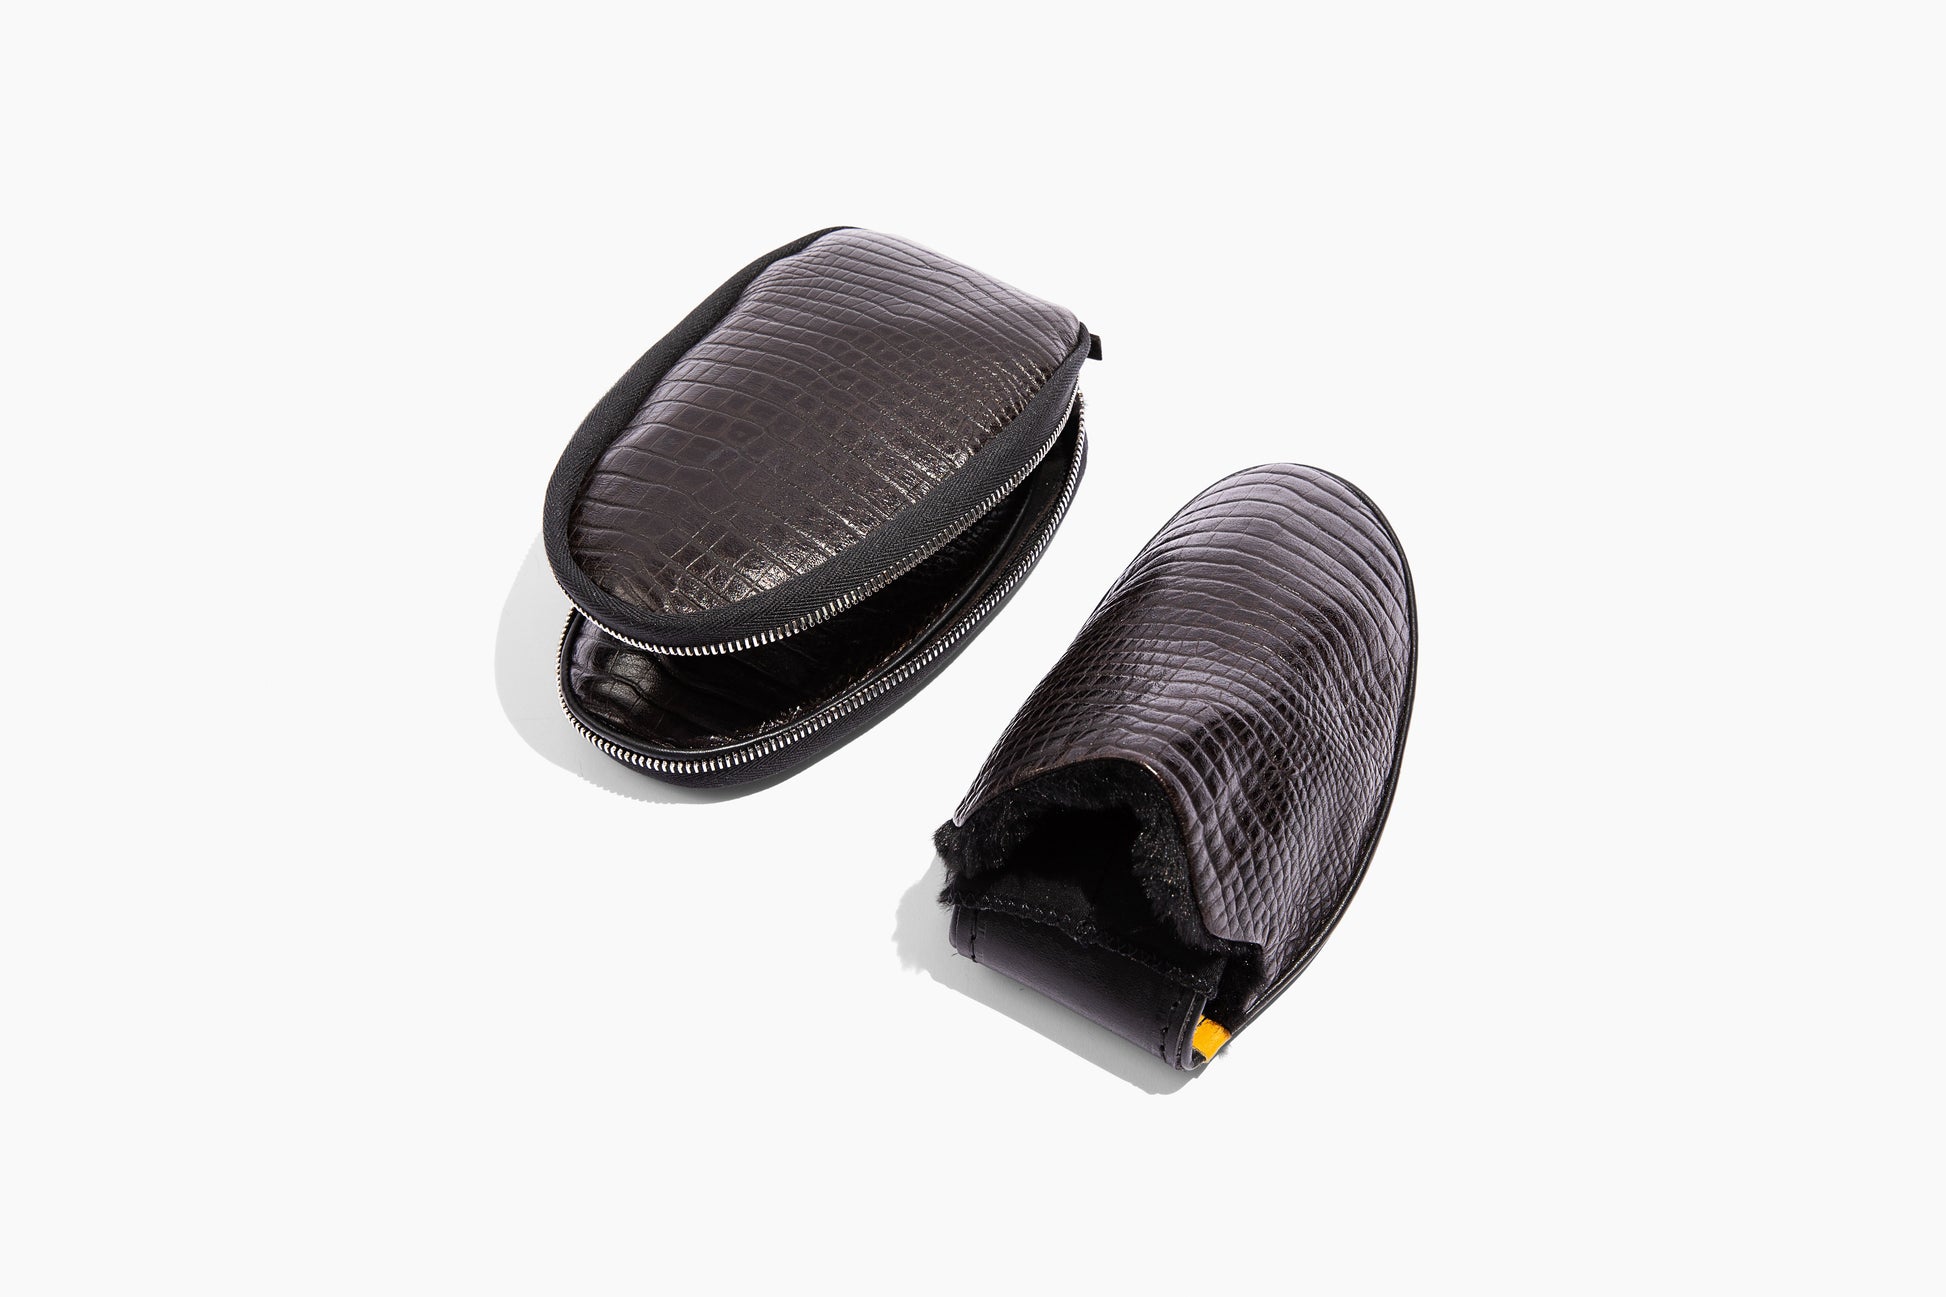 Luxury crocodile embossed leather. Black Eco-fur lining. Foldable travel slipper. Handmade in Italy.